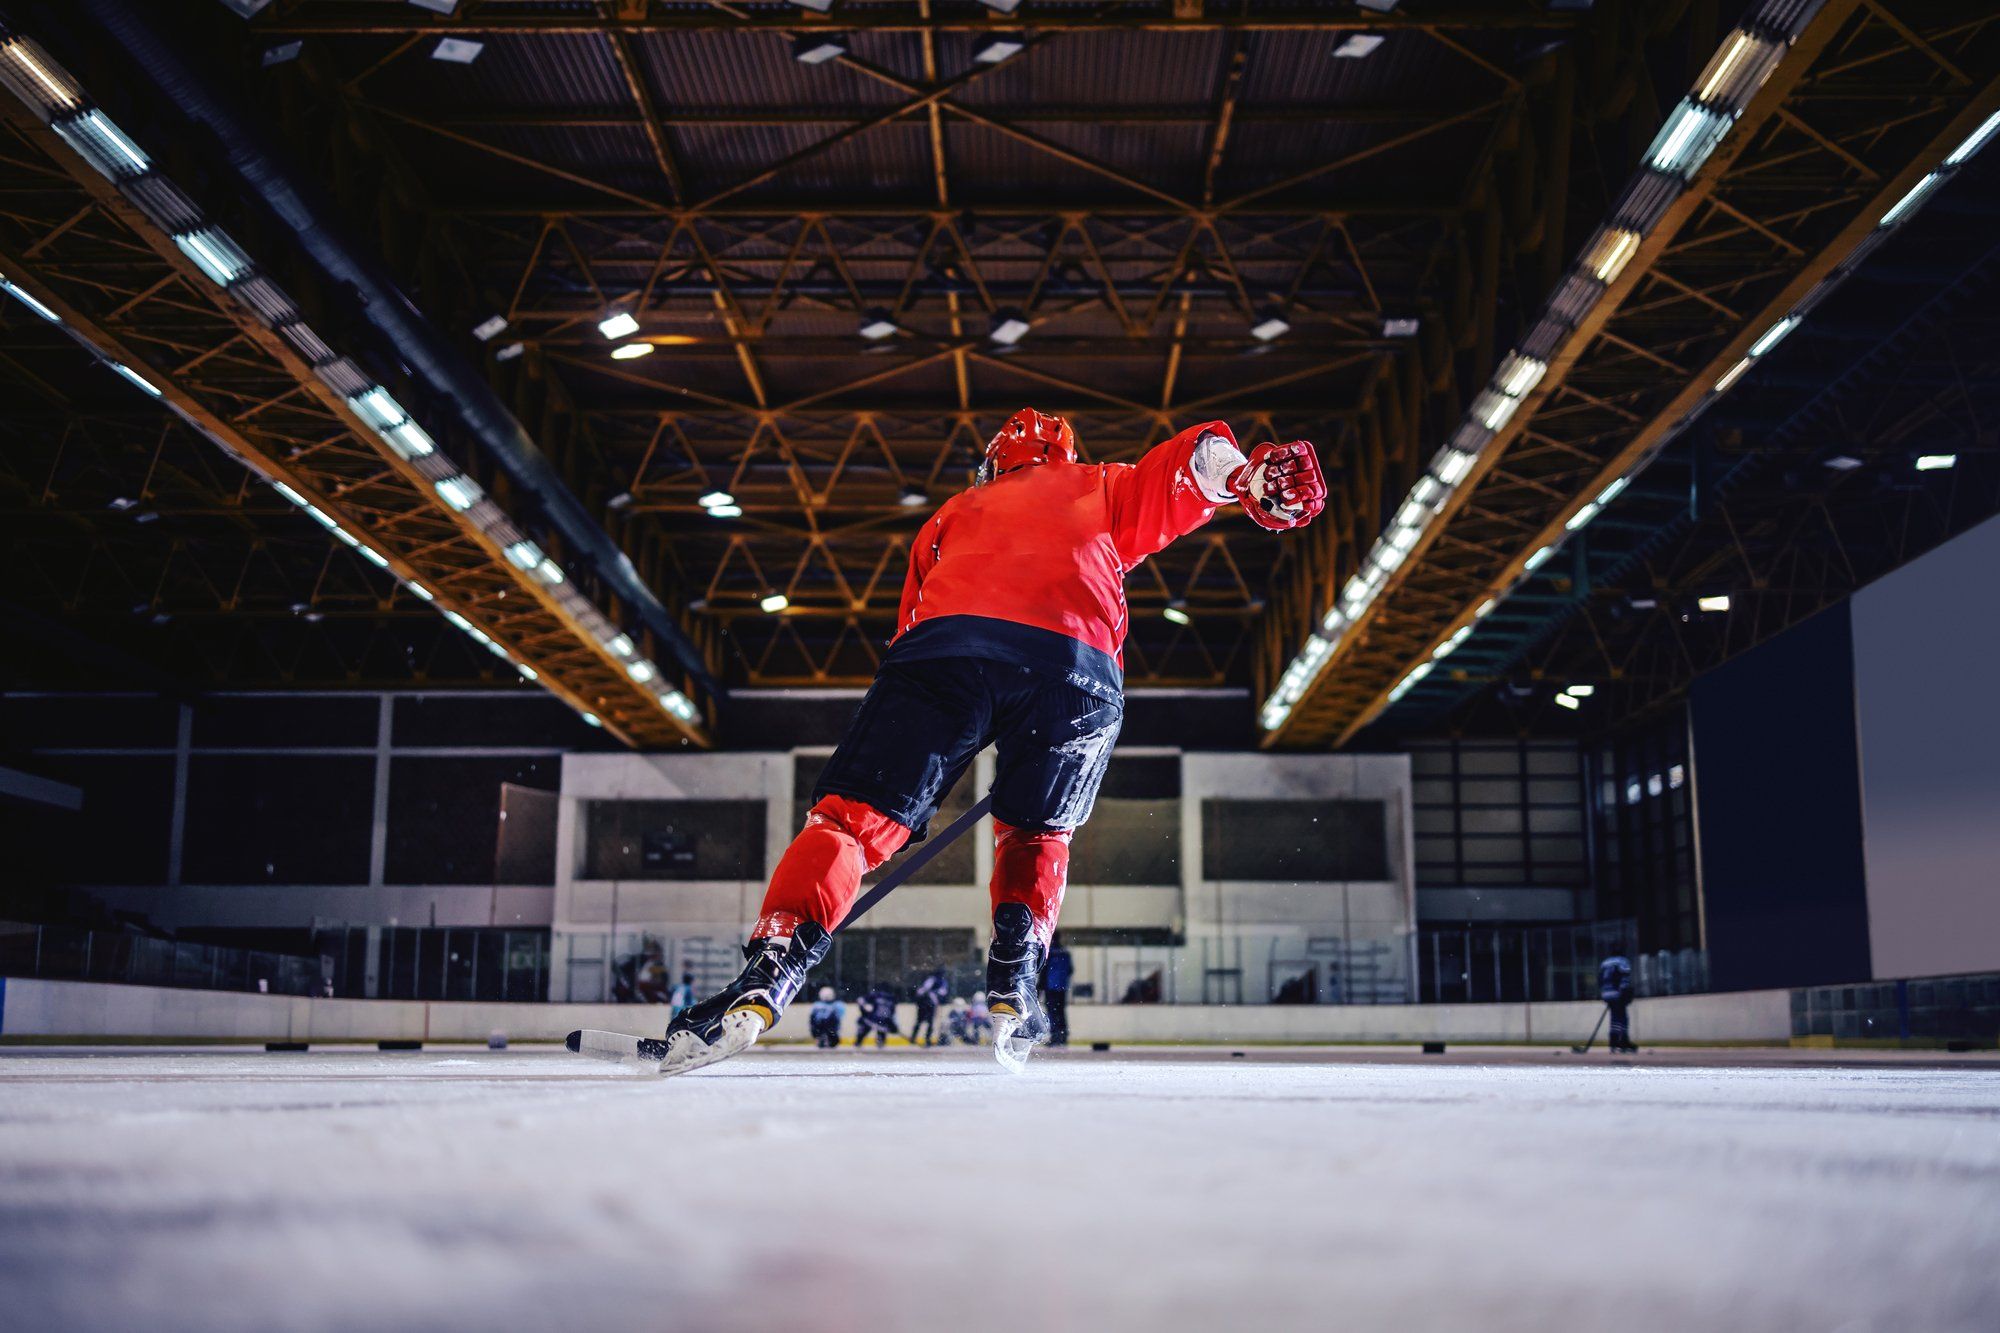 Hockey player skating regarding the Canadian Hockey League minimum wage class action lawsuit settlements 